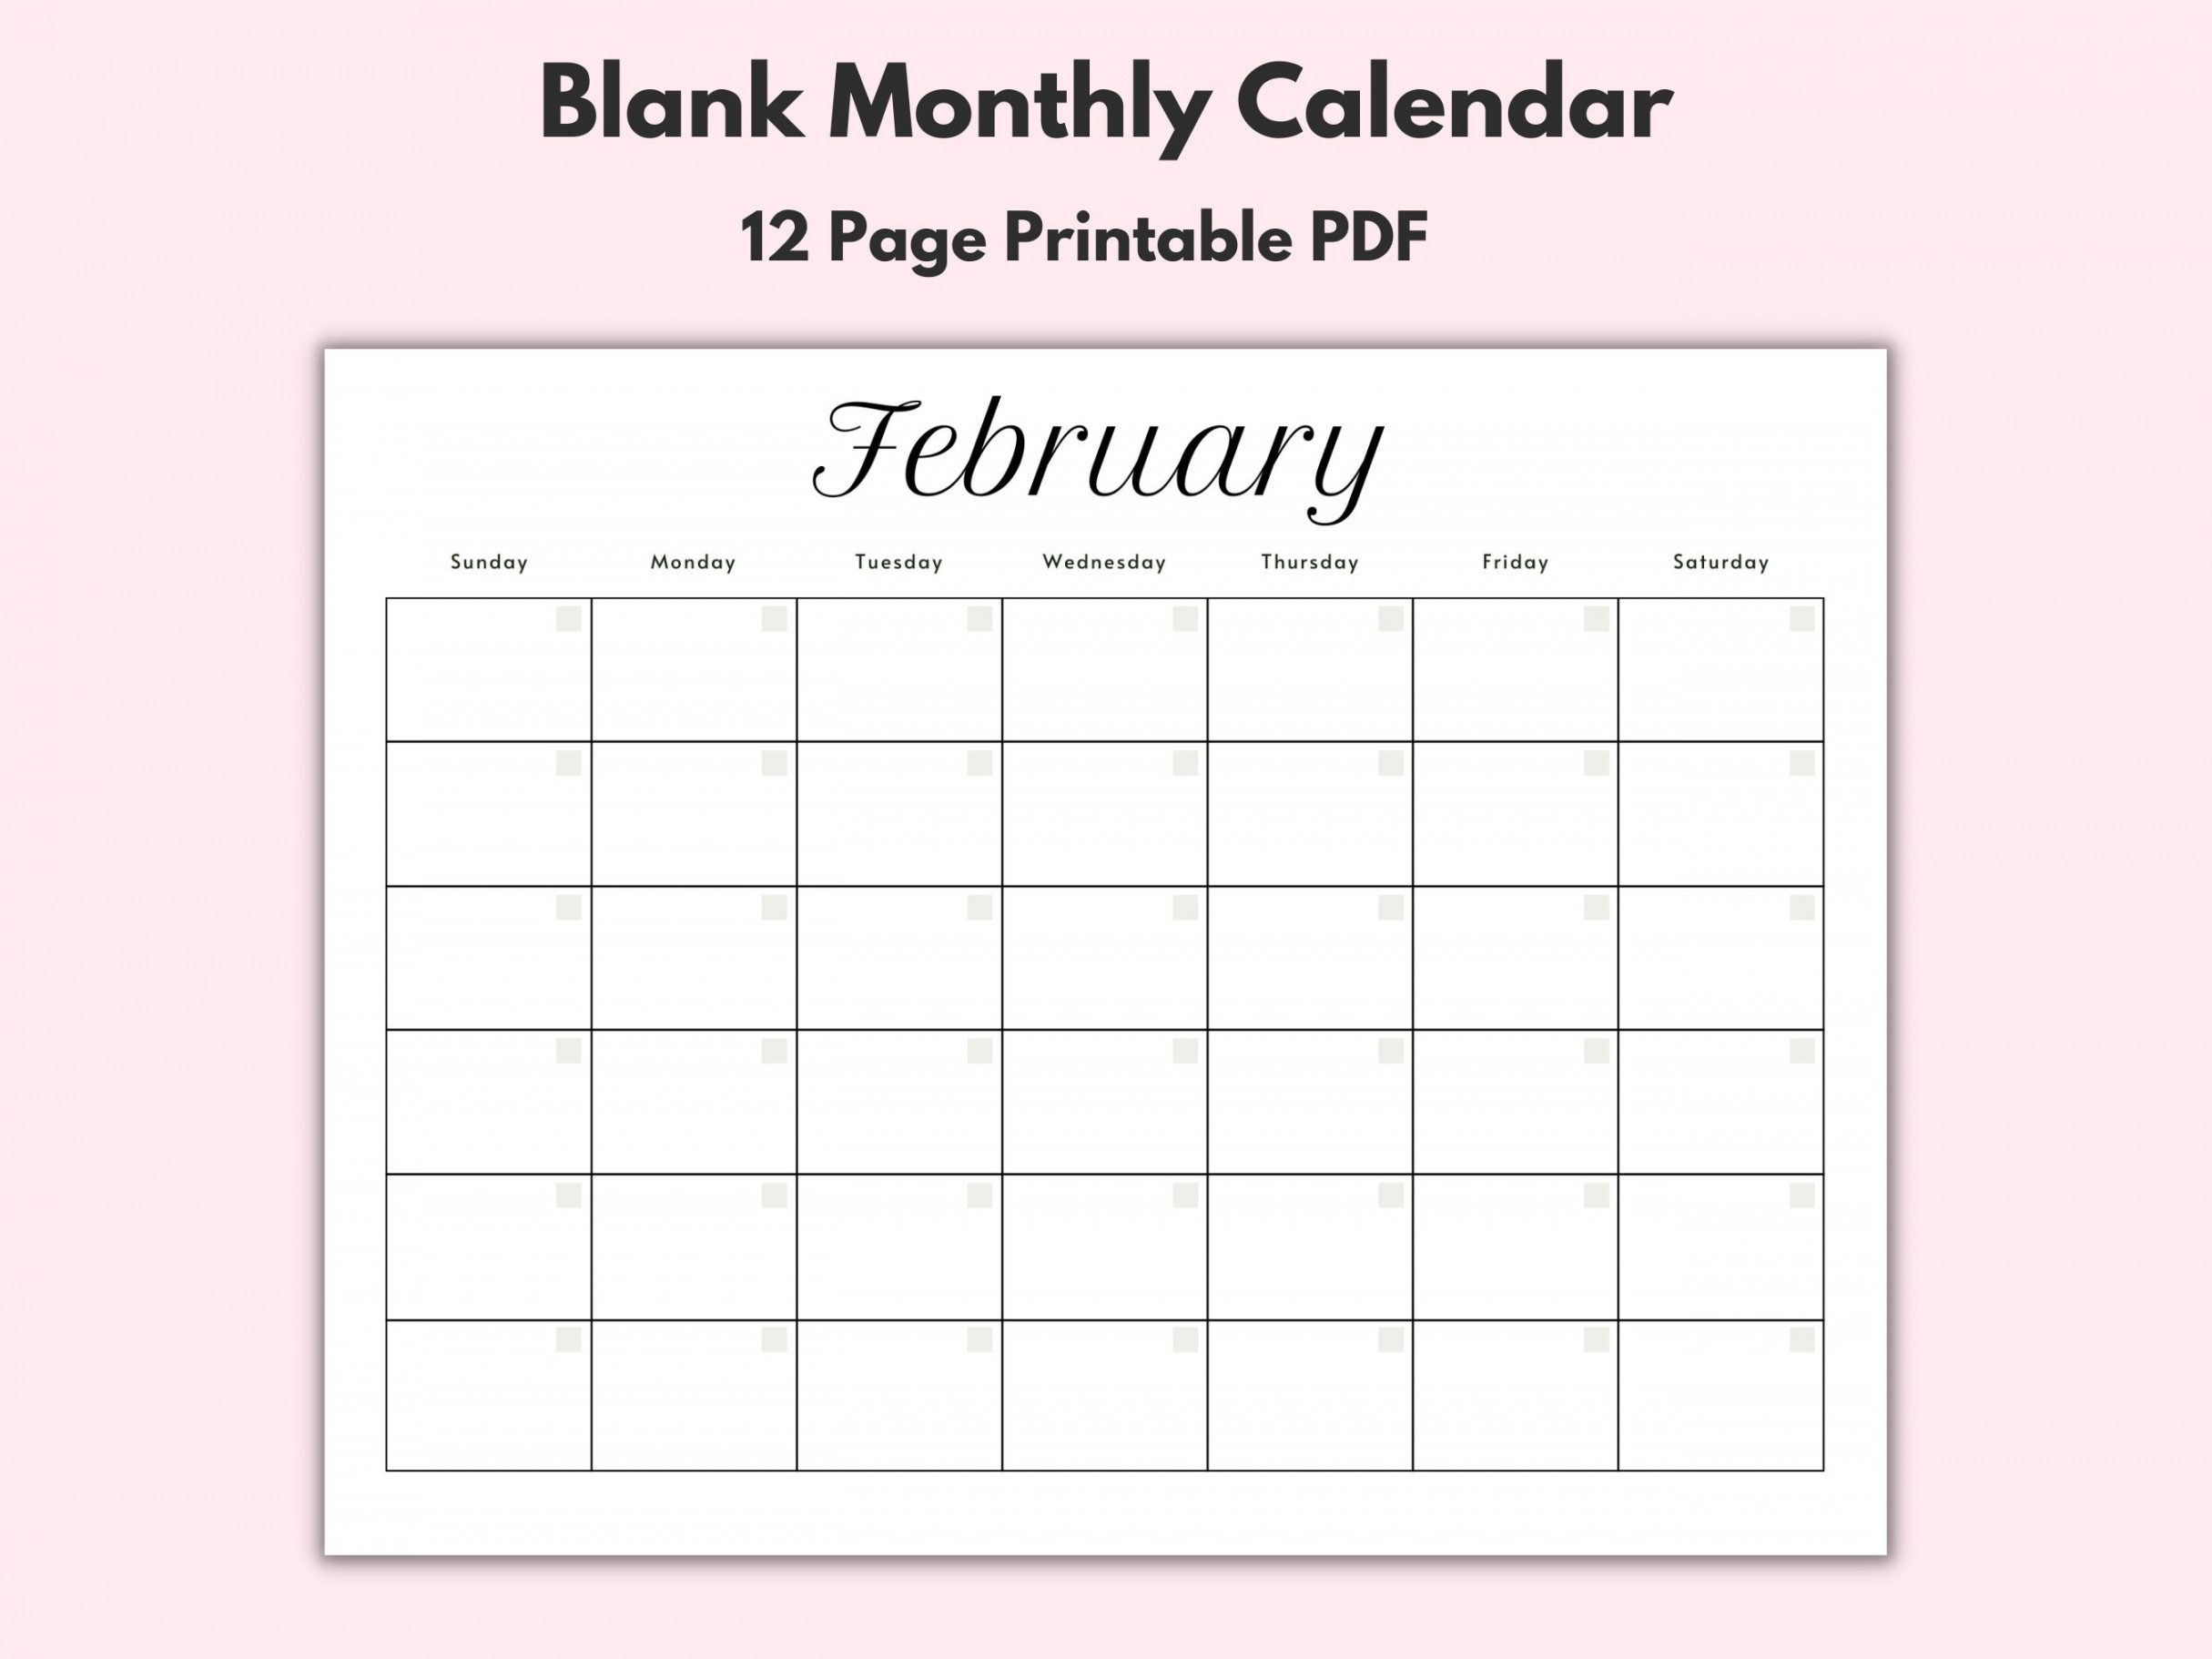 Monthly Blank Calendar Printable Calendar Template - Etsy Israel